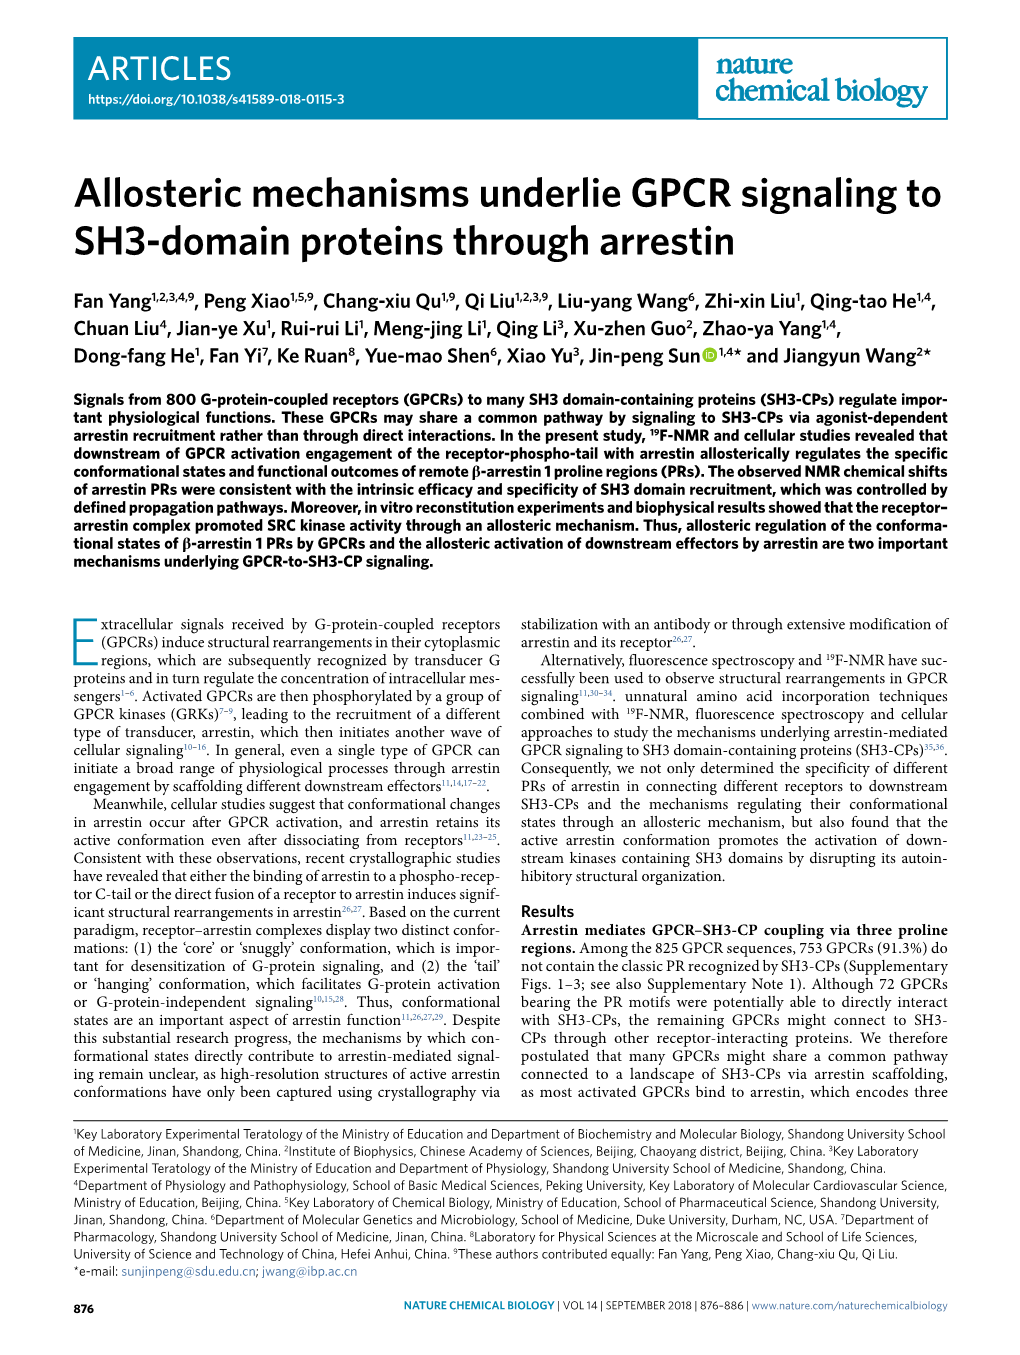 Allosteric Mechanisms Underlie GPCR Signaling to SH3-Domain Proteins Through Arrestin